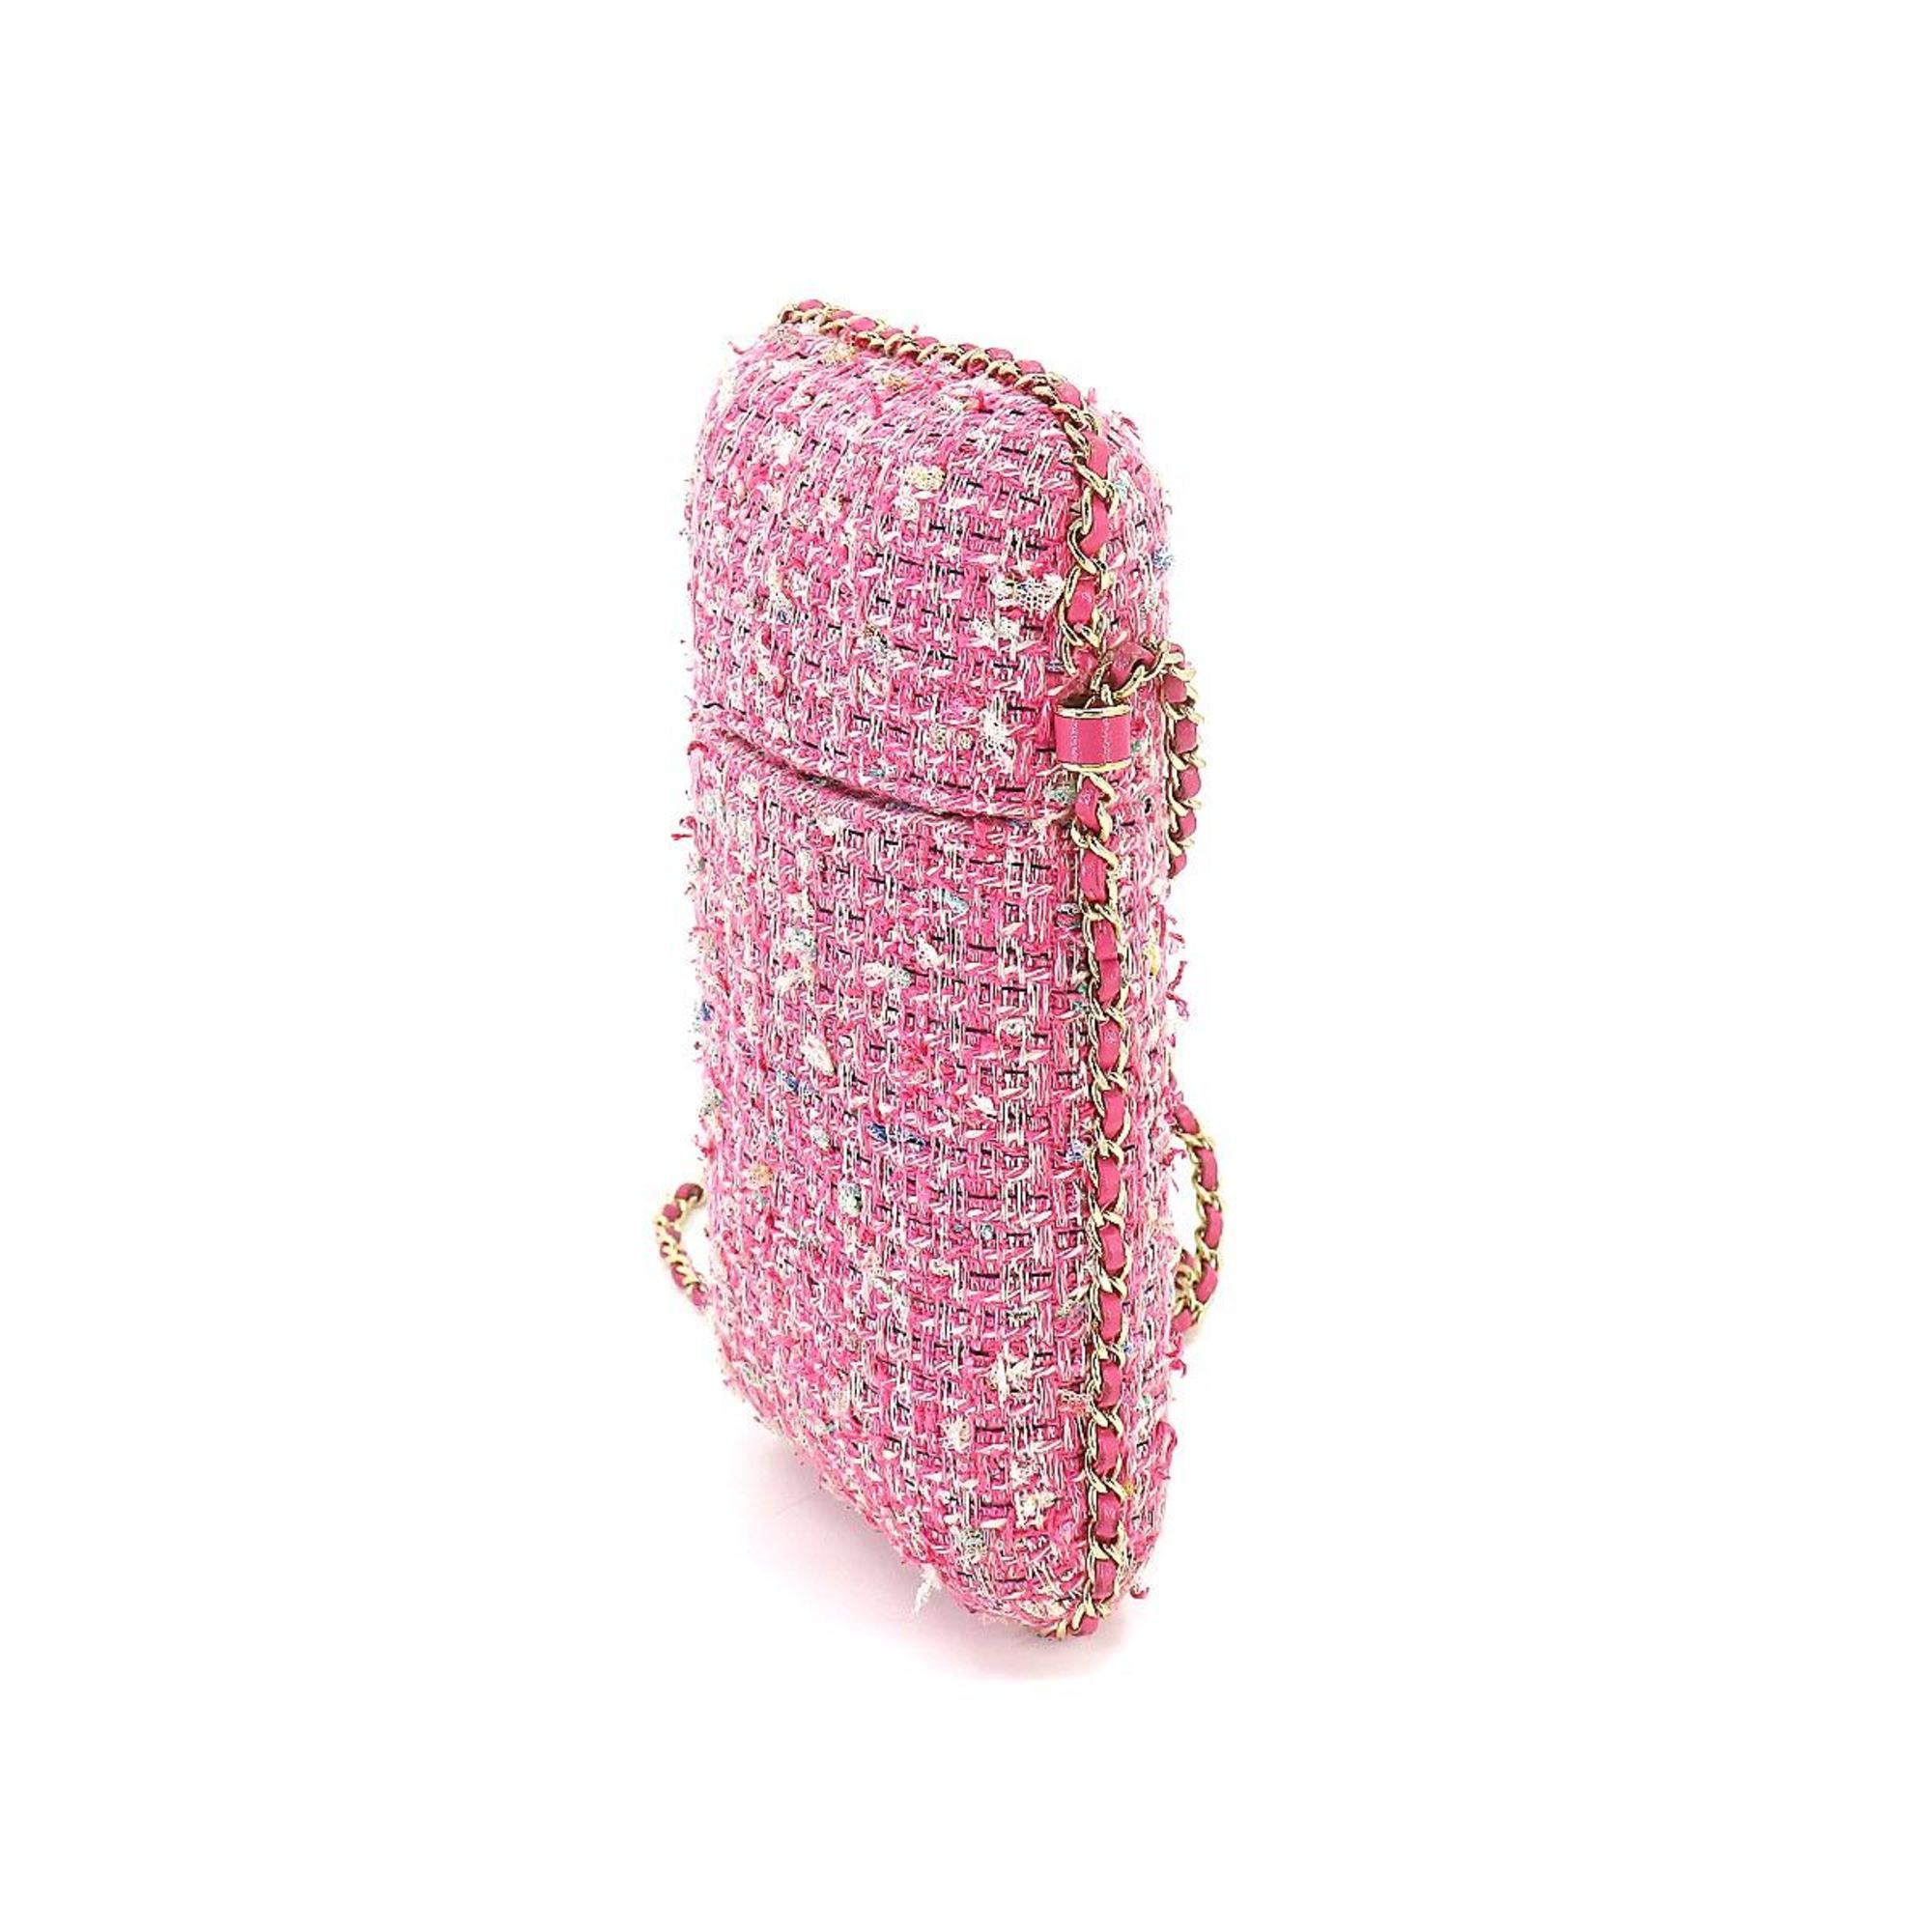 CHANEL Matelasse Chain Phone Holder Shoulder Bag Tweed Leather Pink A94471